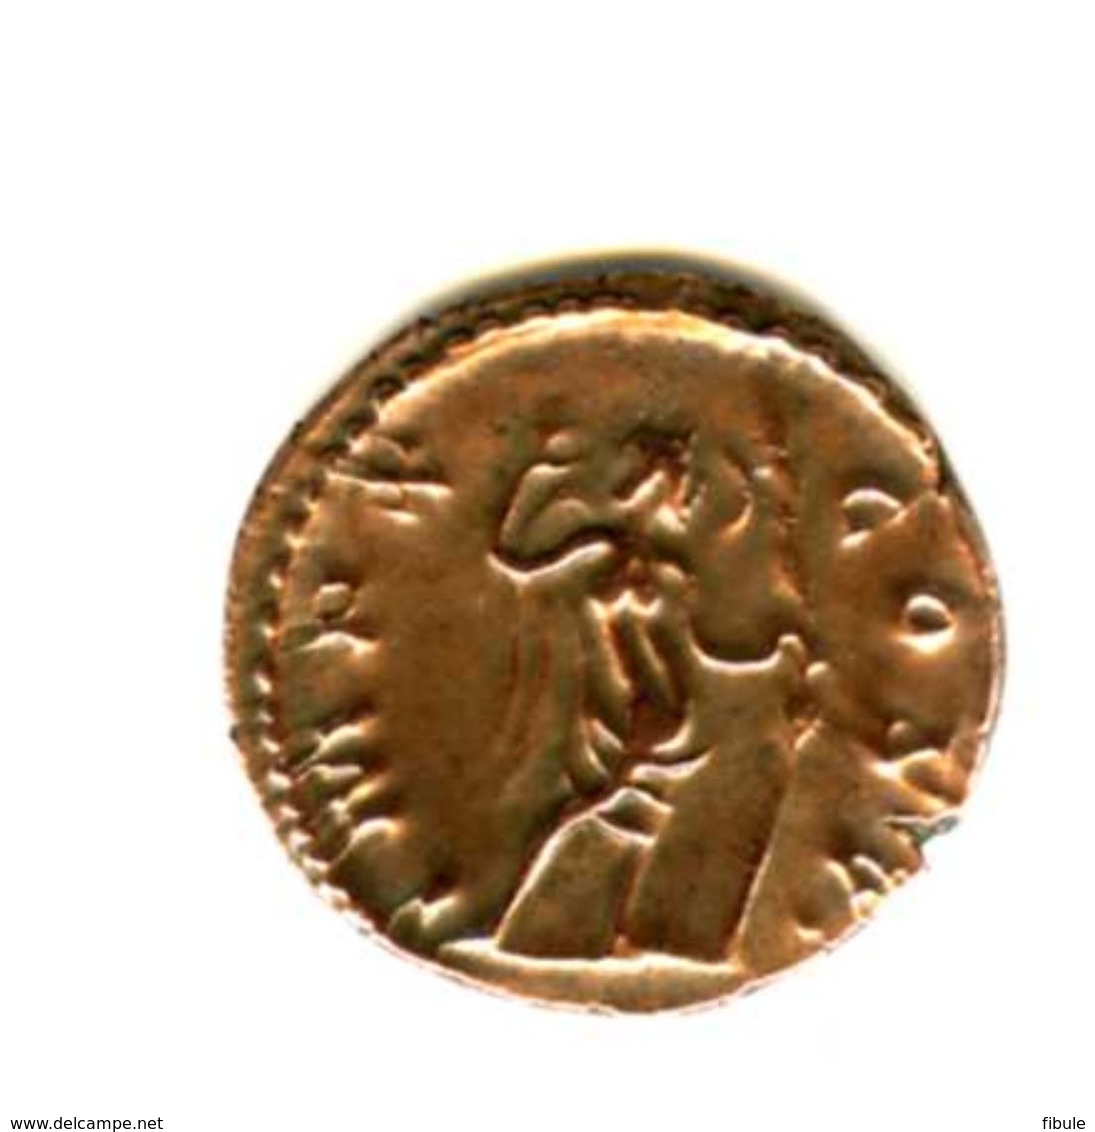 Monnaie Romaine De POSTUME 259-268 - The Military Crisis (235 AD To 284 AD)